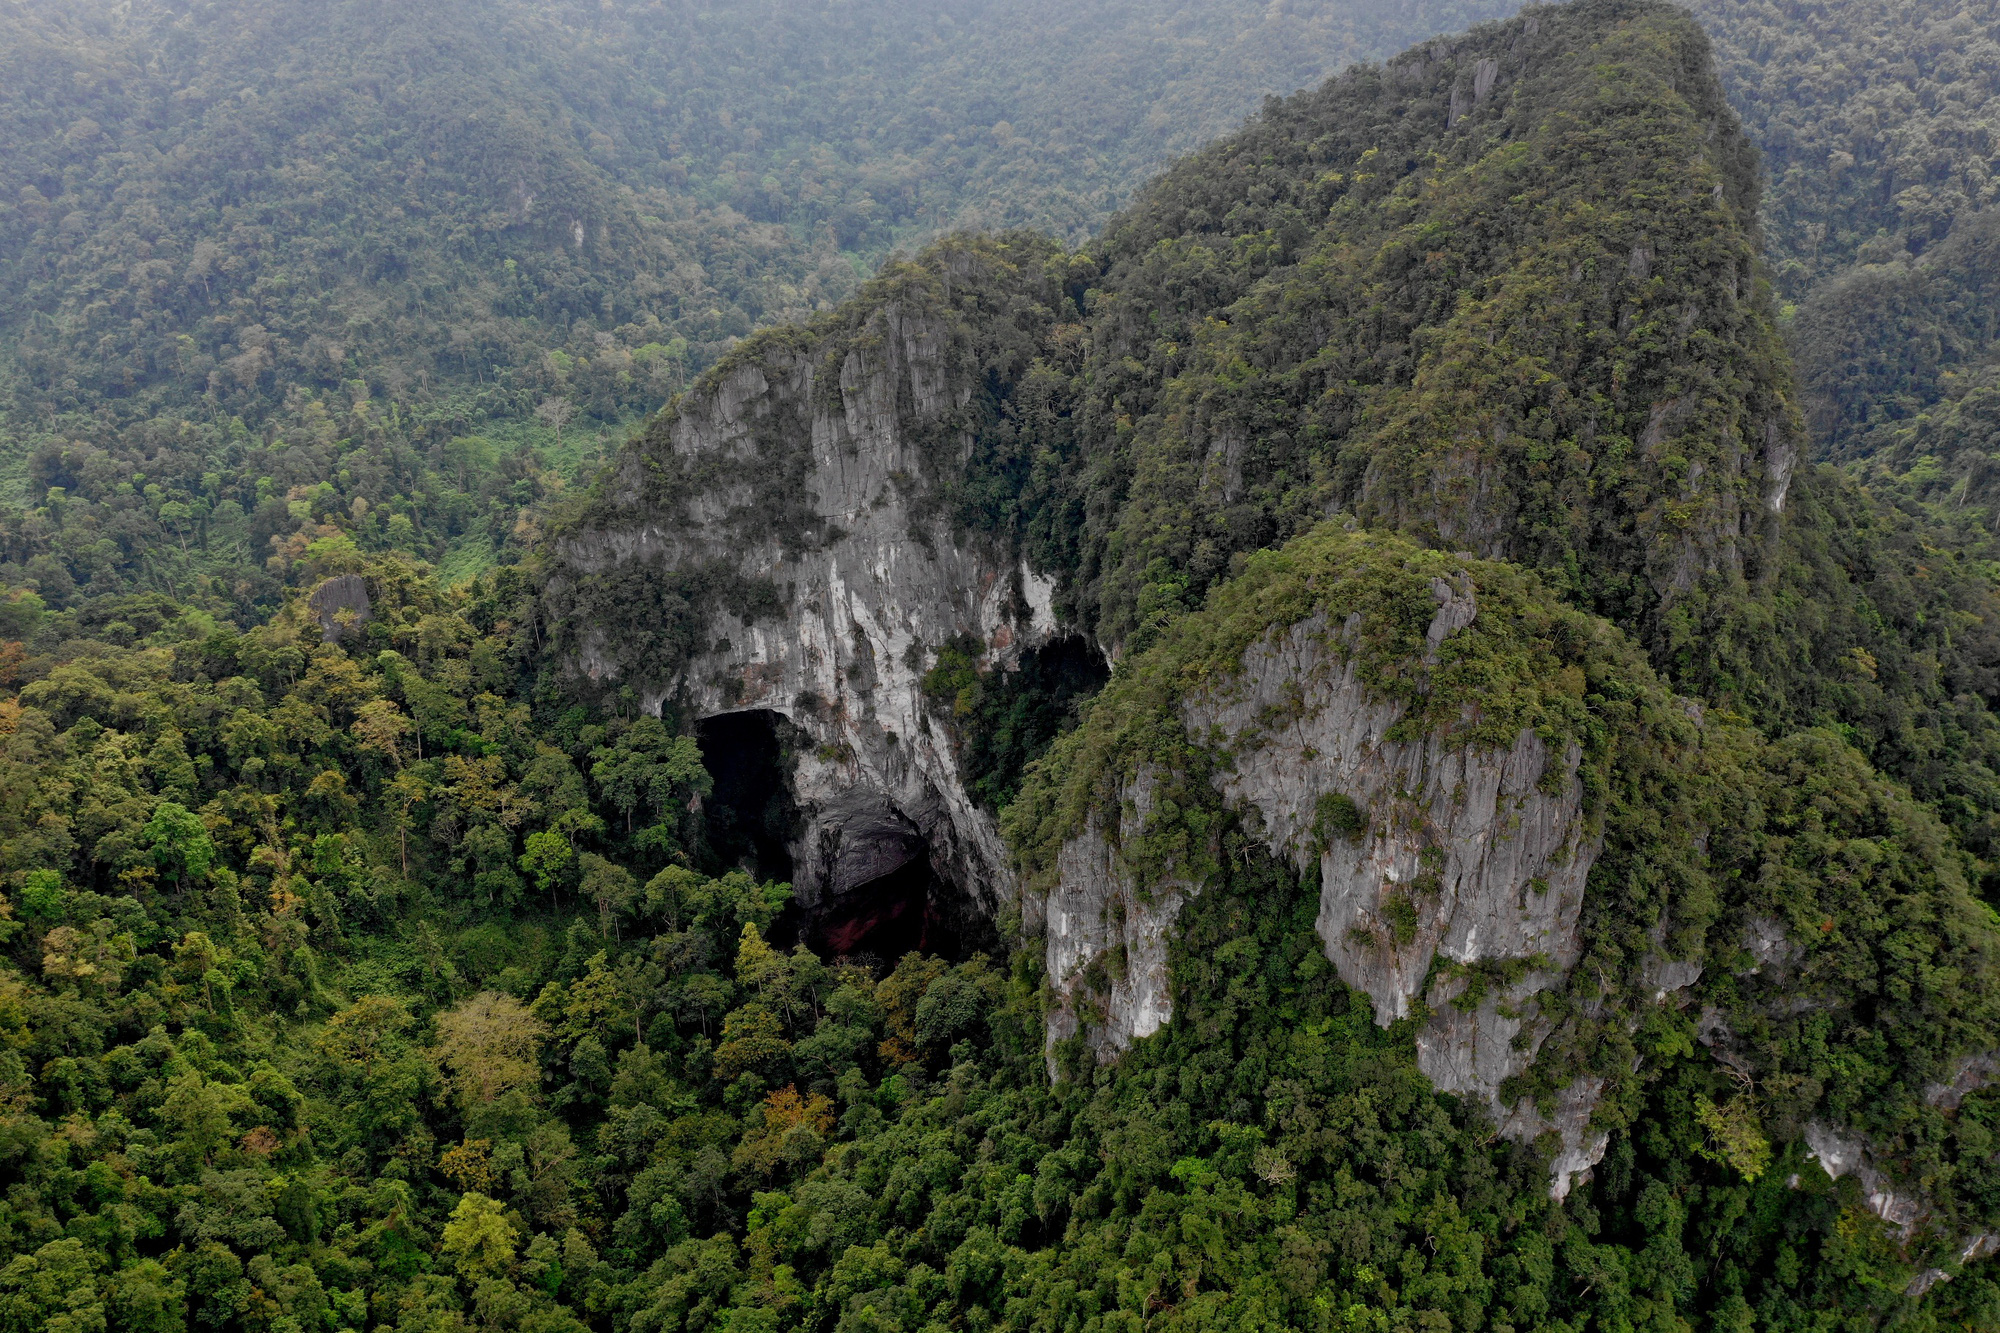 New exit discovered at Kong Collapse in Vietnam’s Phong Nha-Ke Bang cave systems